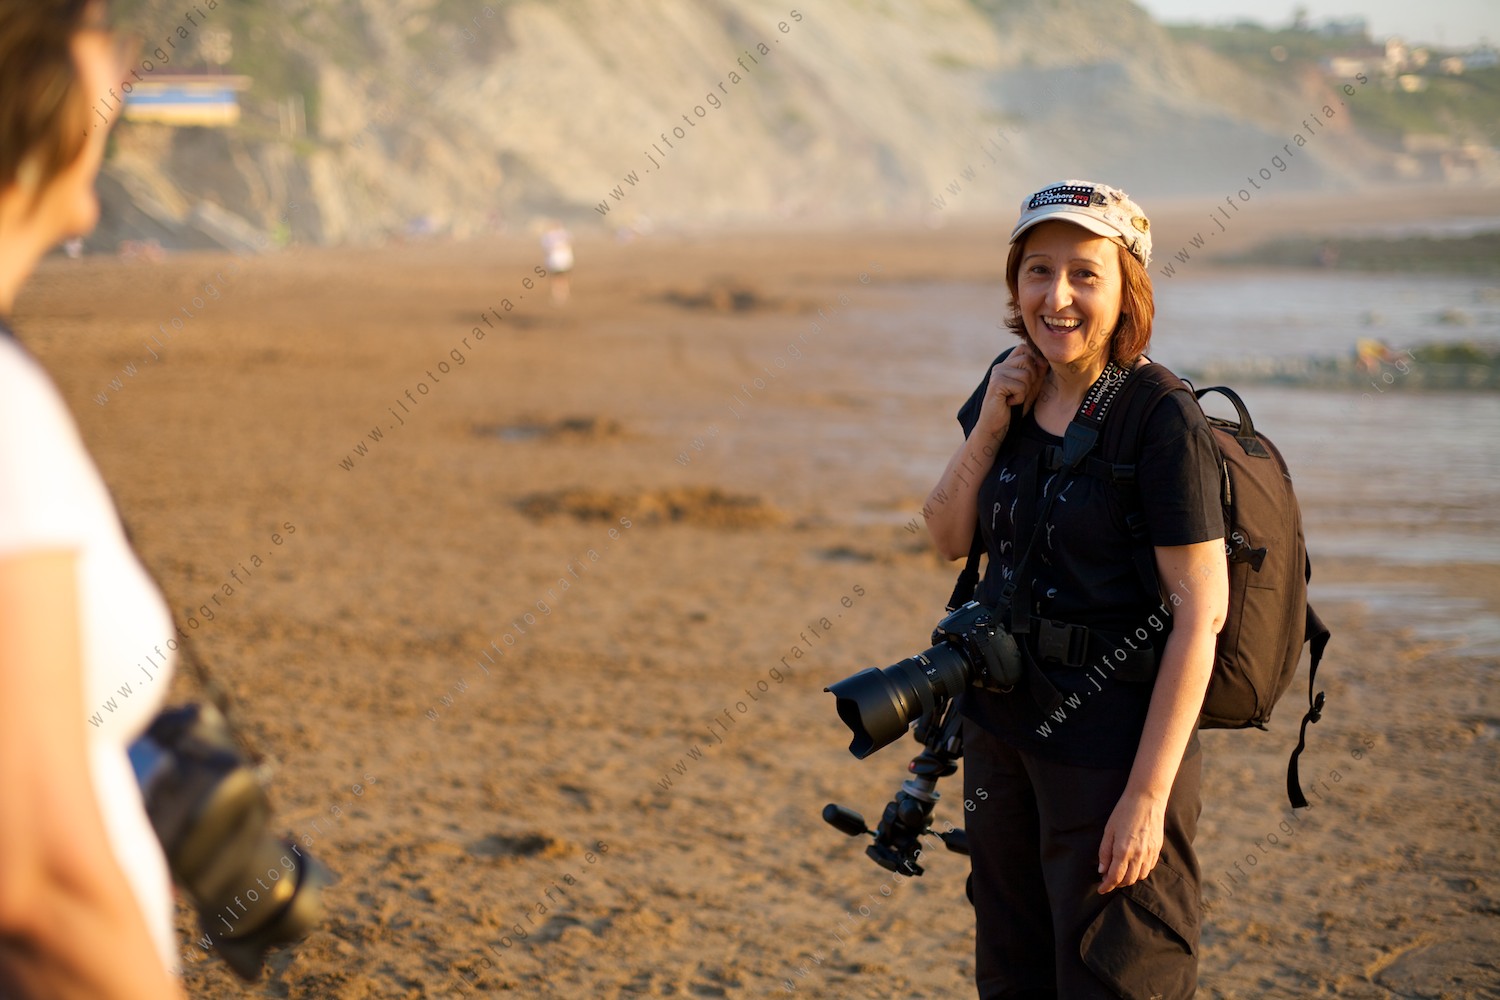 Josune, socia de Denbora, retratada con el equipo lista para ir a fotografiar paisajes